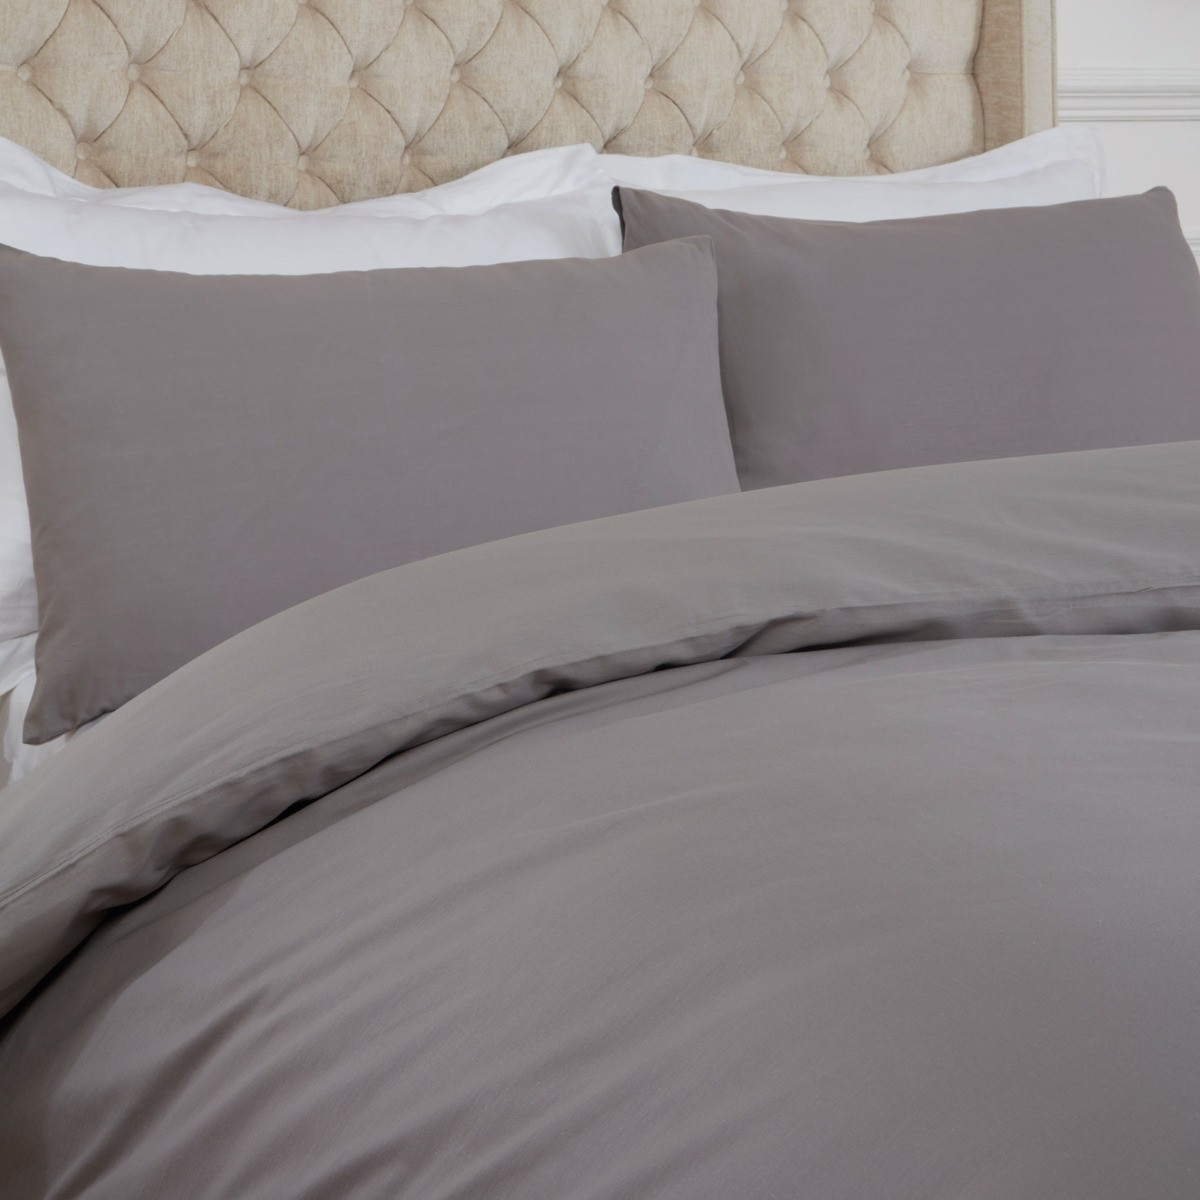 Highams Plain 100% Cotton Duvet Cover with Pillow Case Bedding Set, Grey - King>